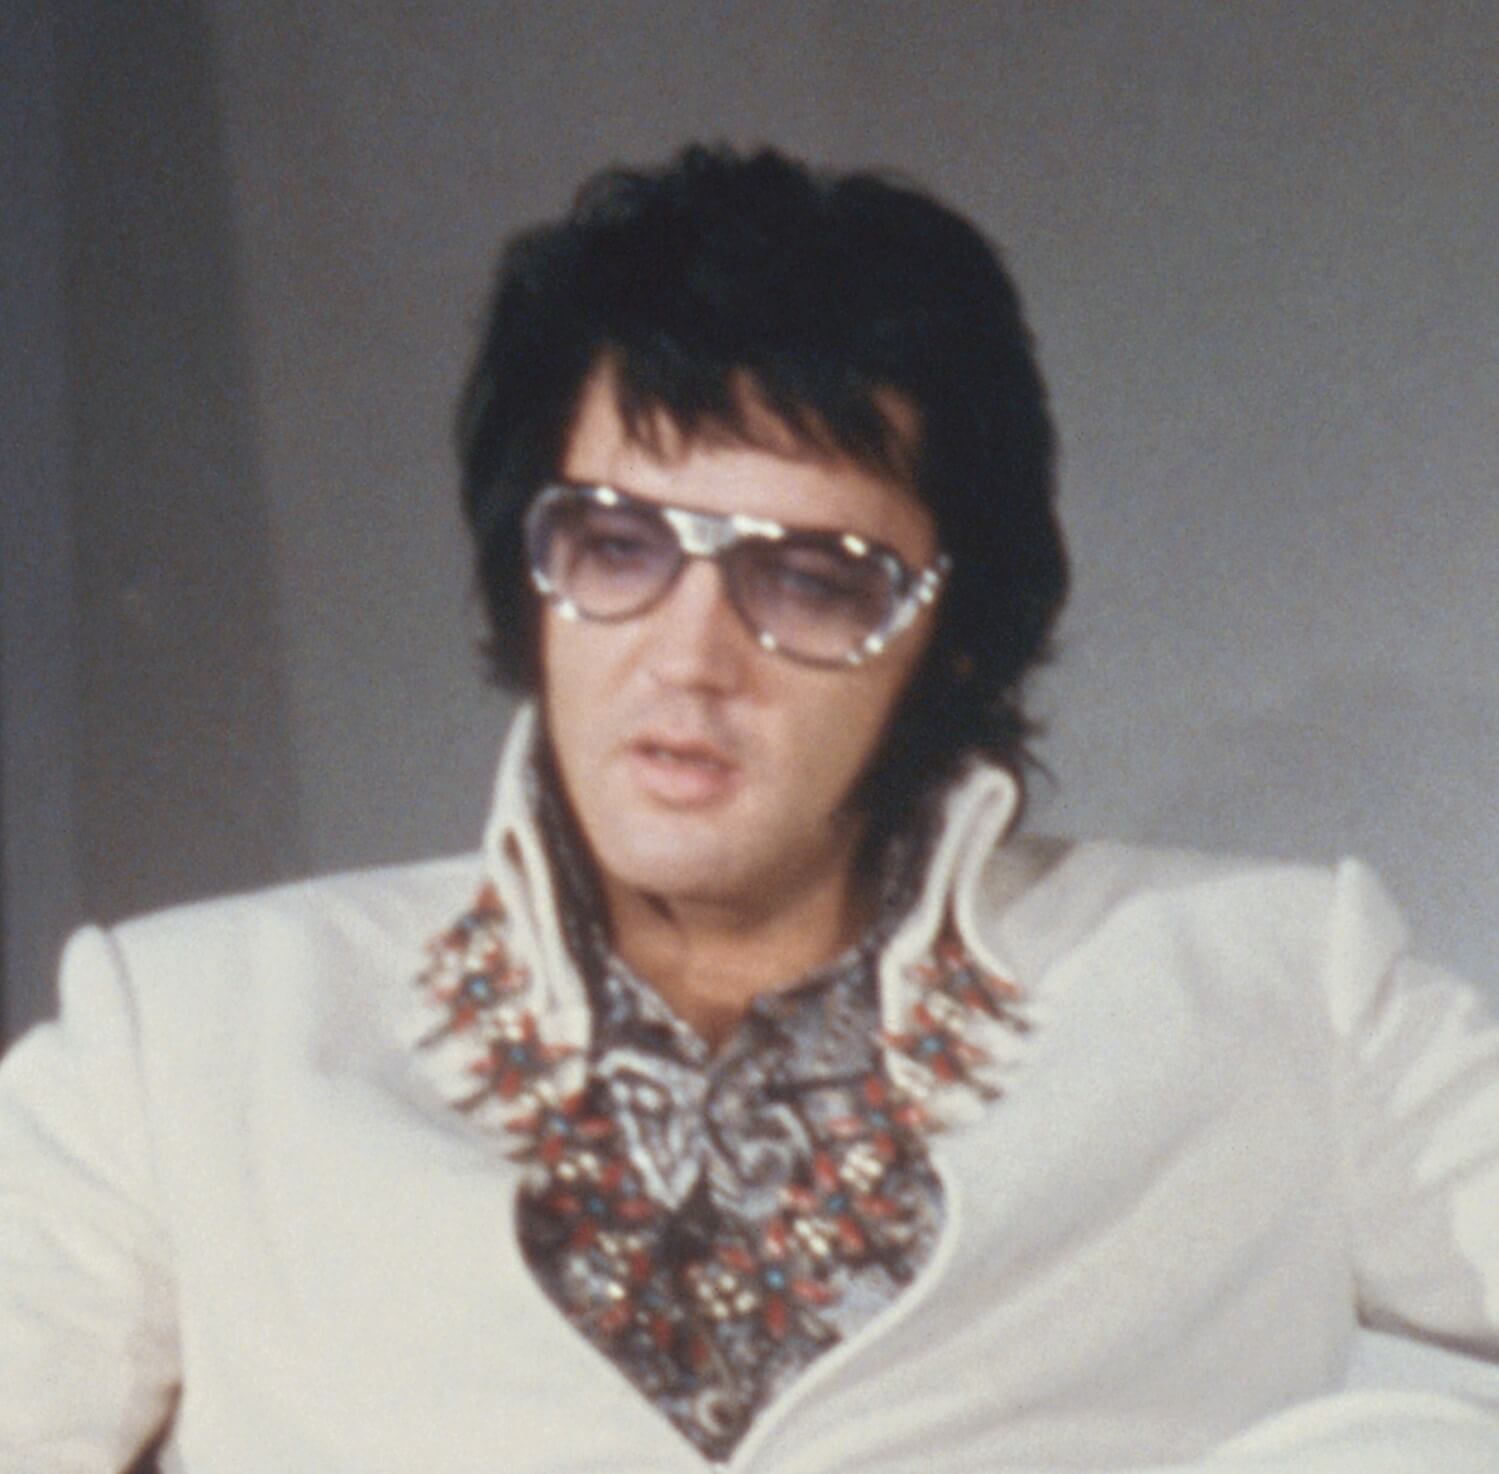 Elvis Presley - All Shook Up (Official Audio) 